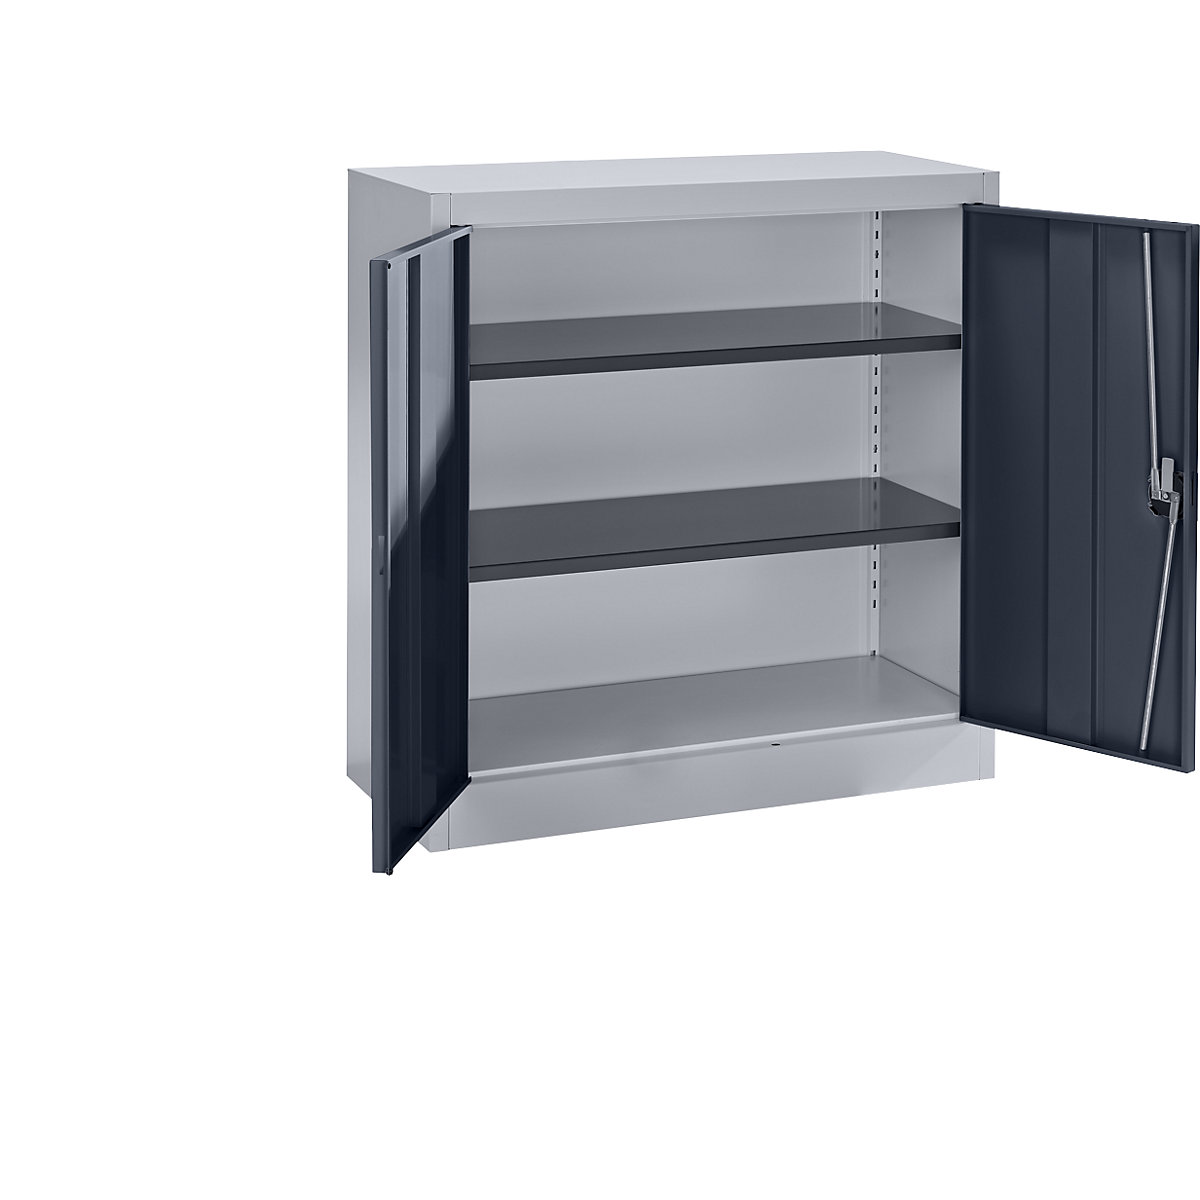 Steel cupboard with hinged doors – mauser